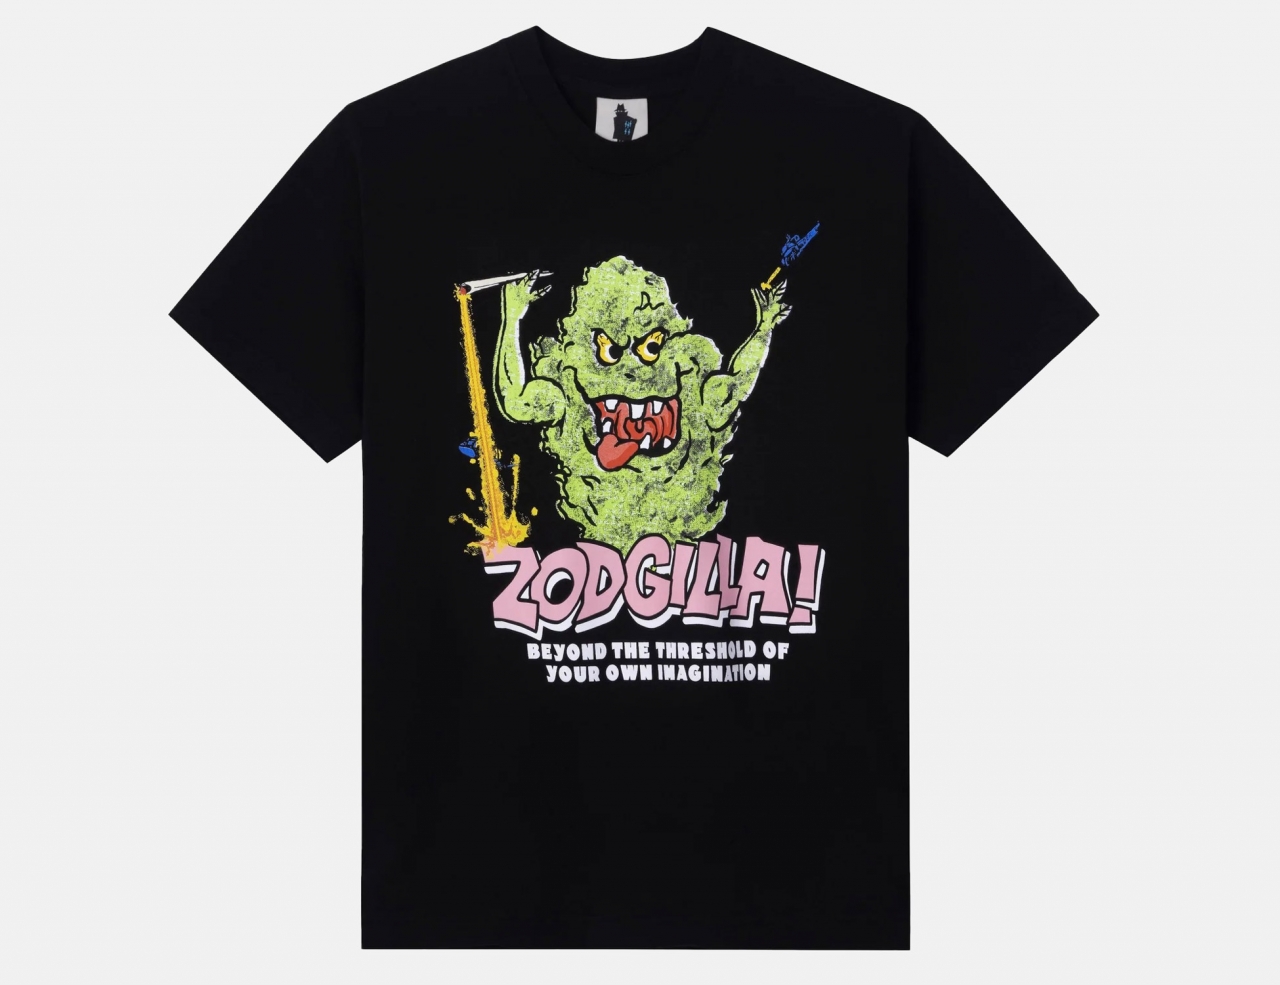 Real Bad Man Zodgilla! T-Shirt - Black